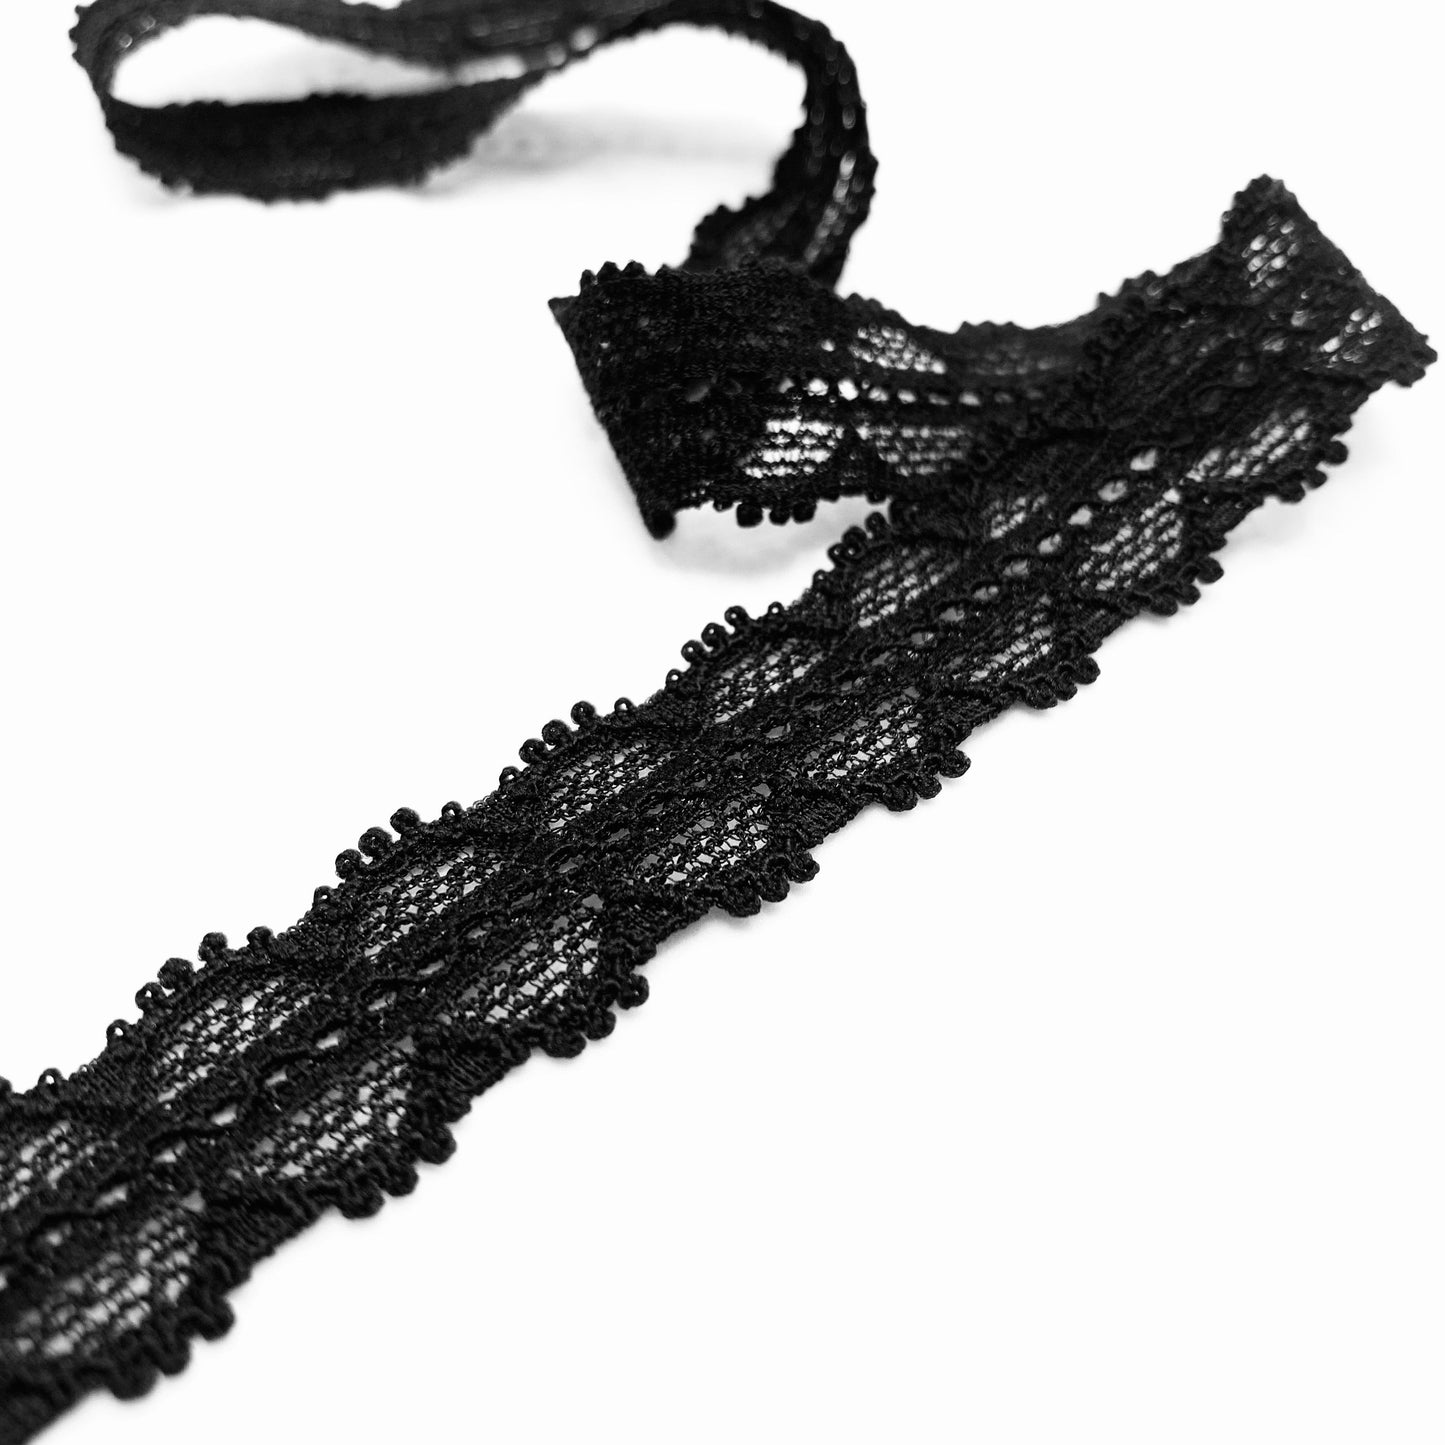 Narrow Stretch Lace Trim in Black | 16mm Wide | Lingerie Making Supplies | Price per metre